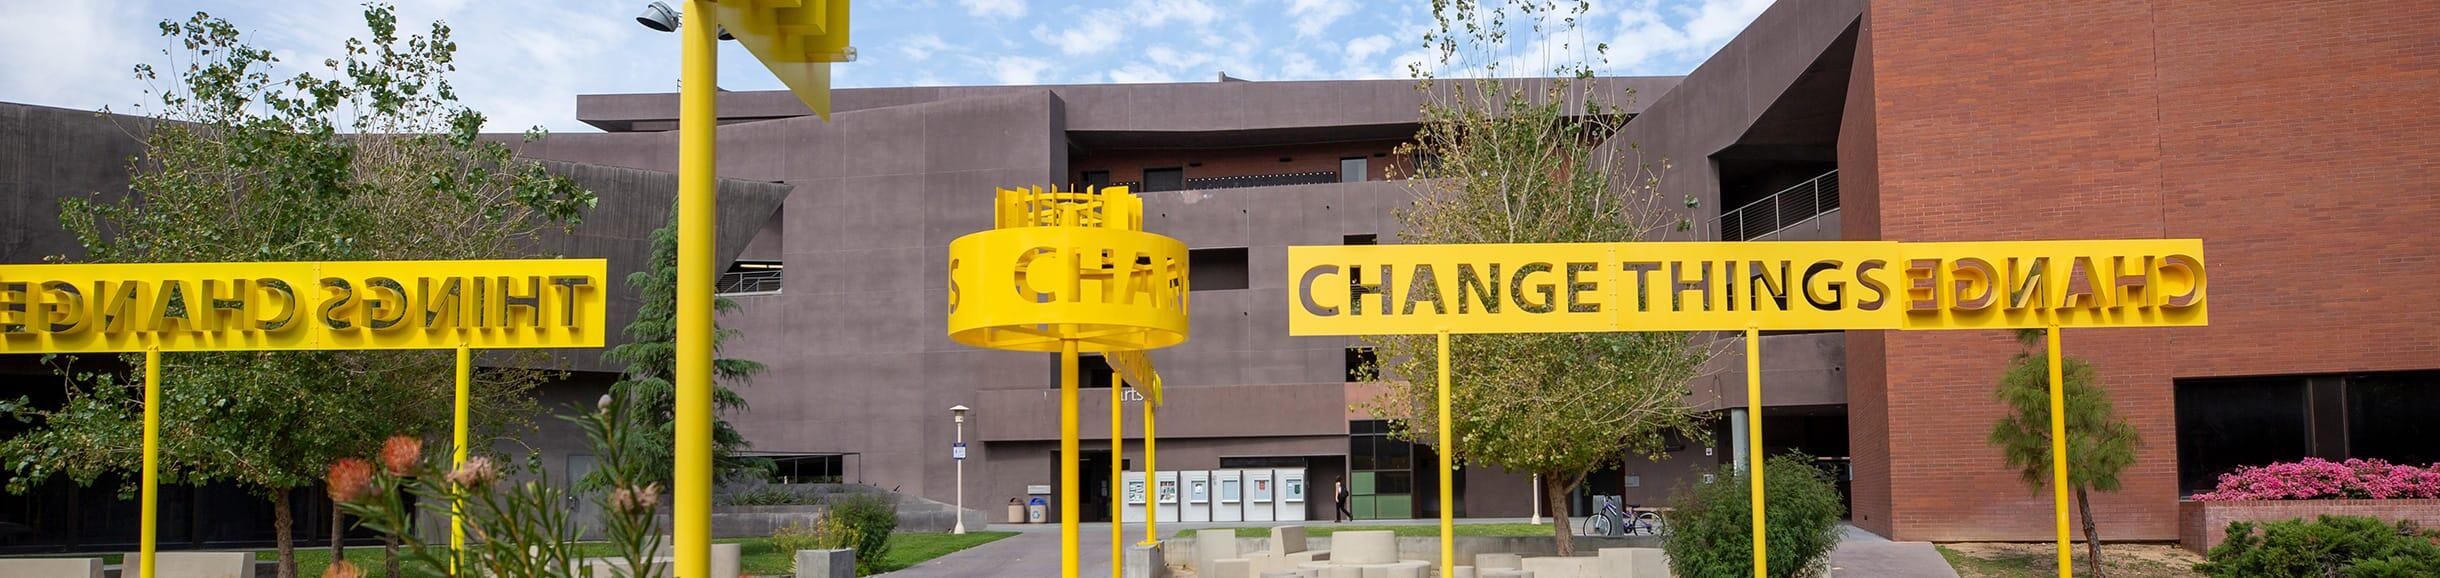 Change Things arts installation at UC Riverside